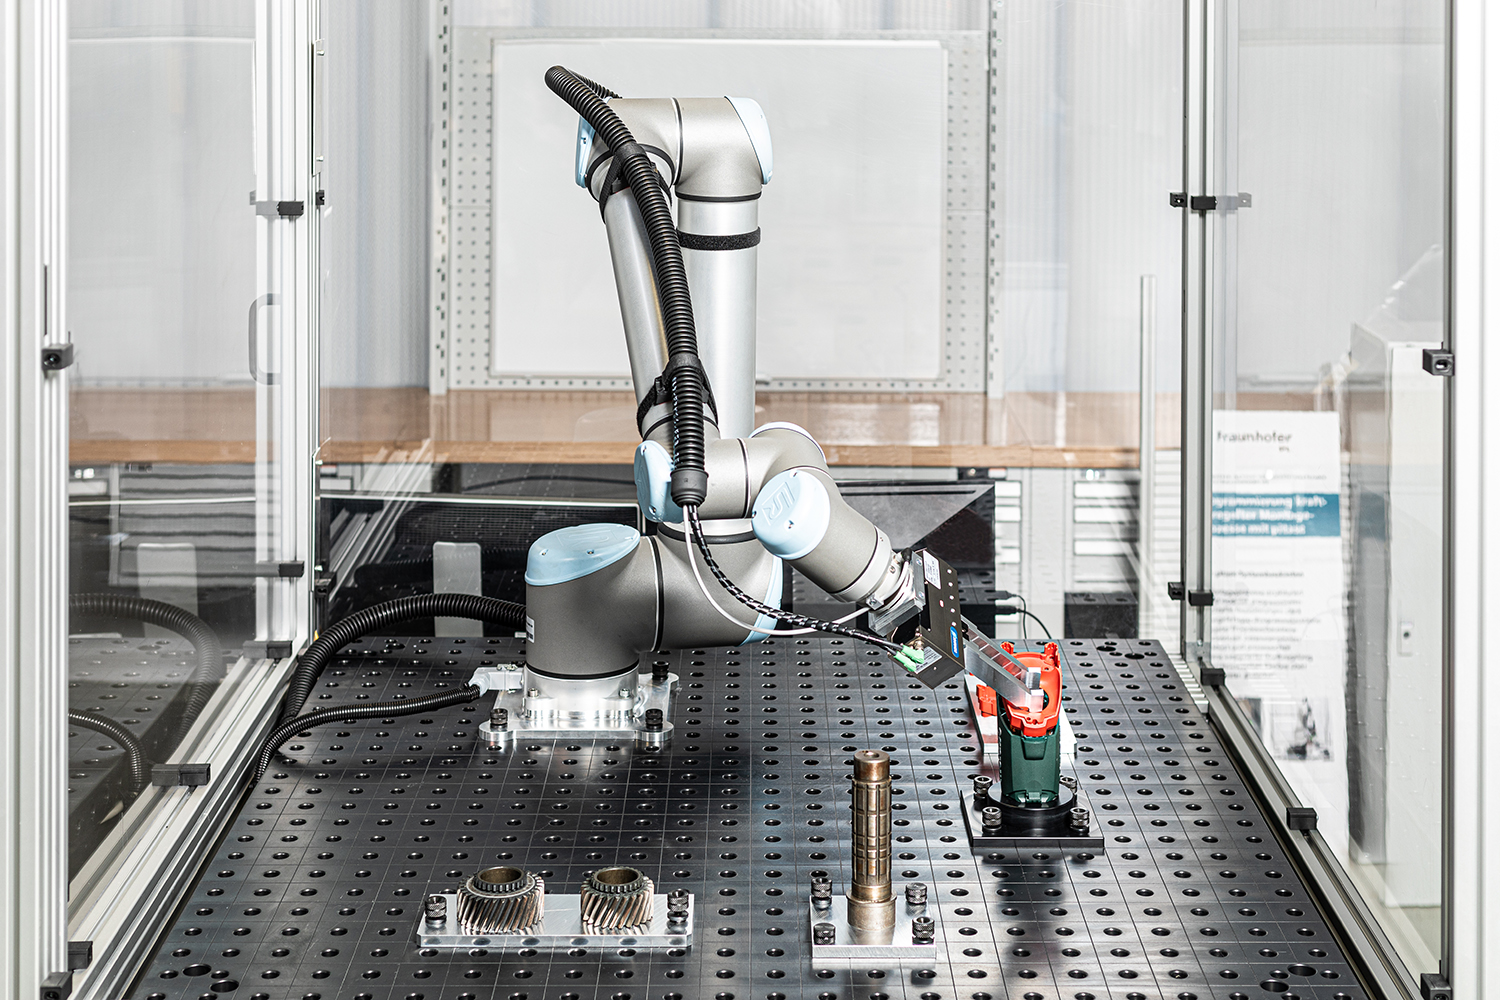 robot assembling components